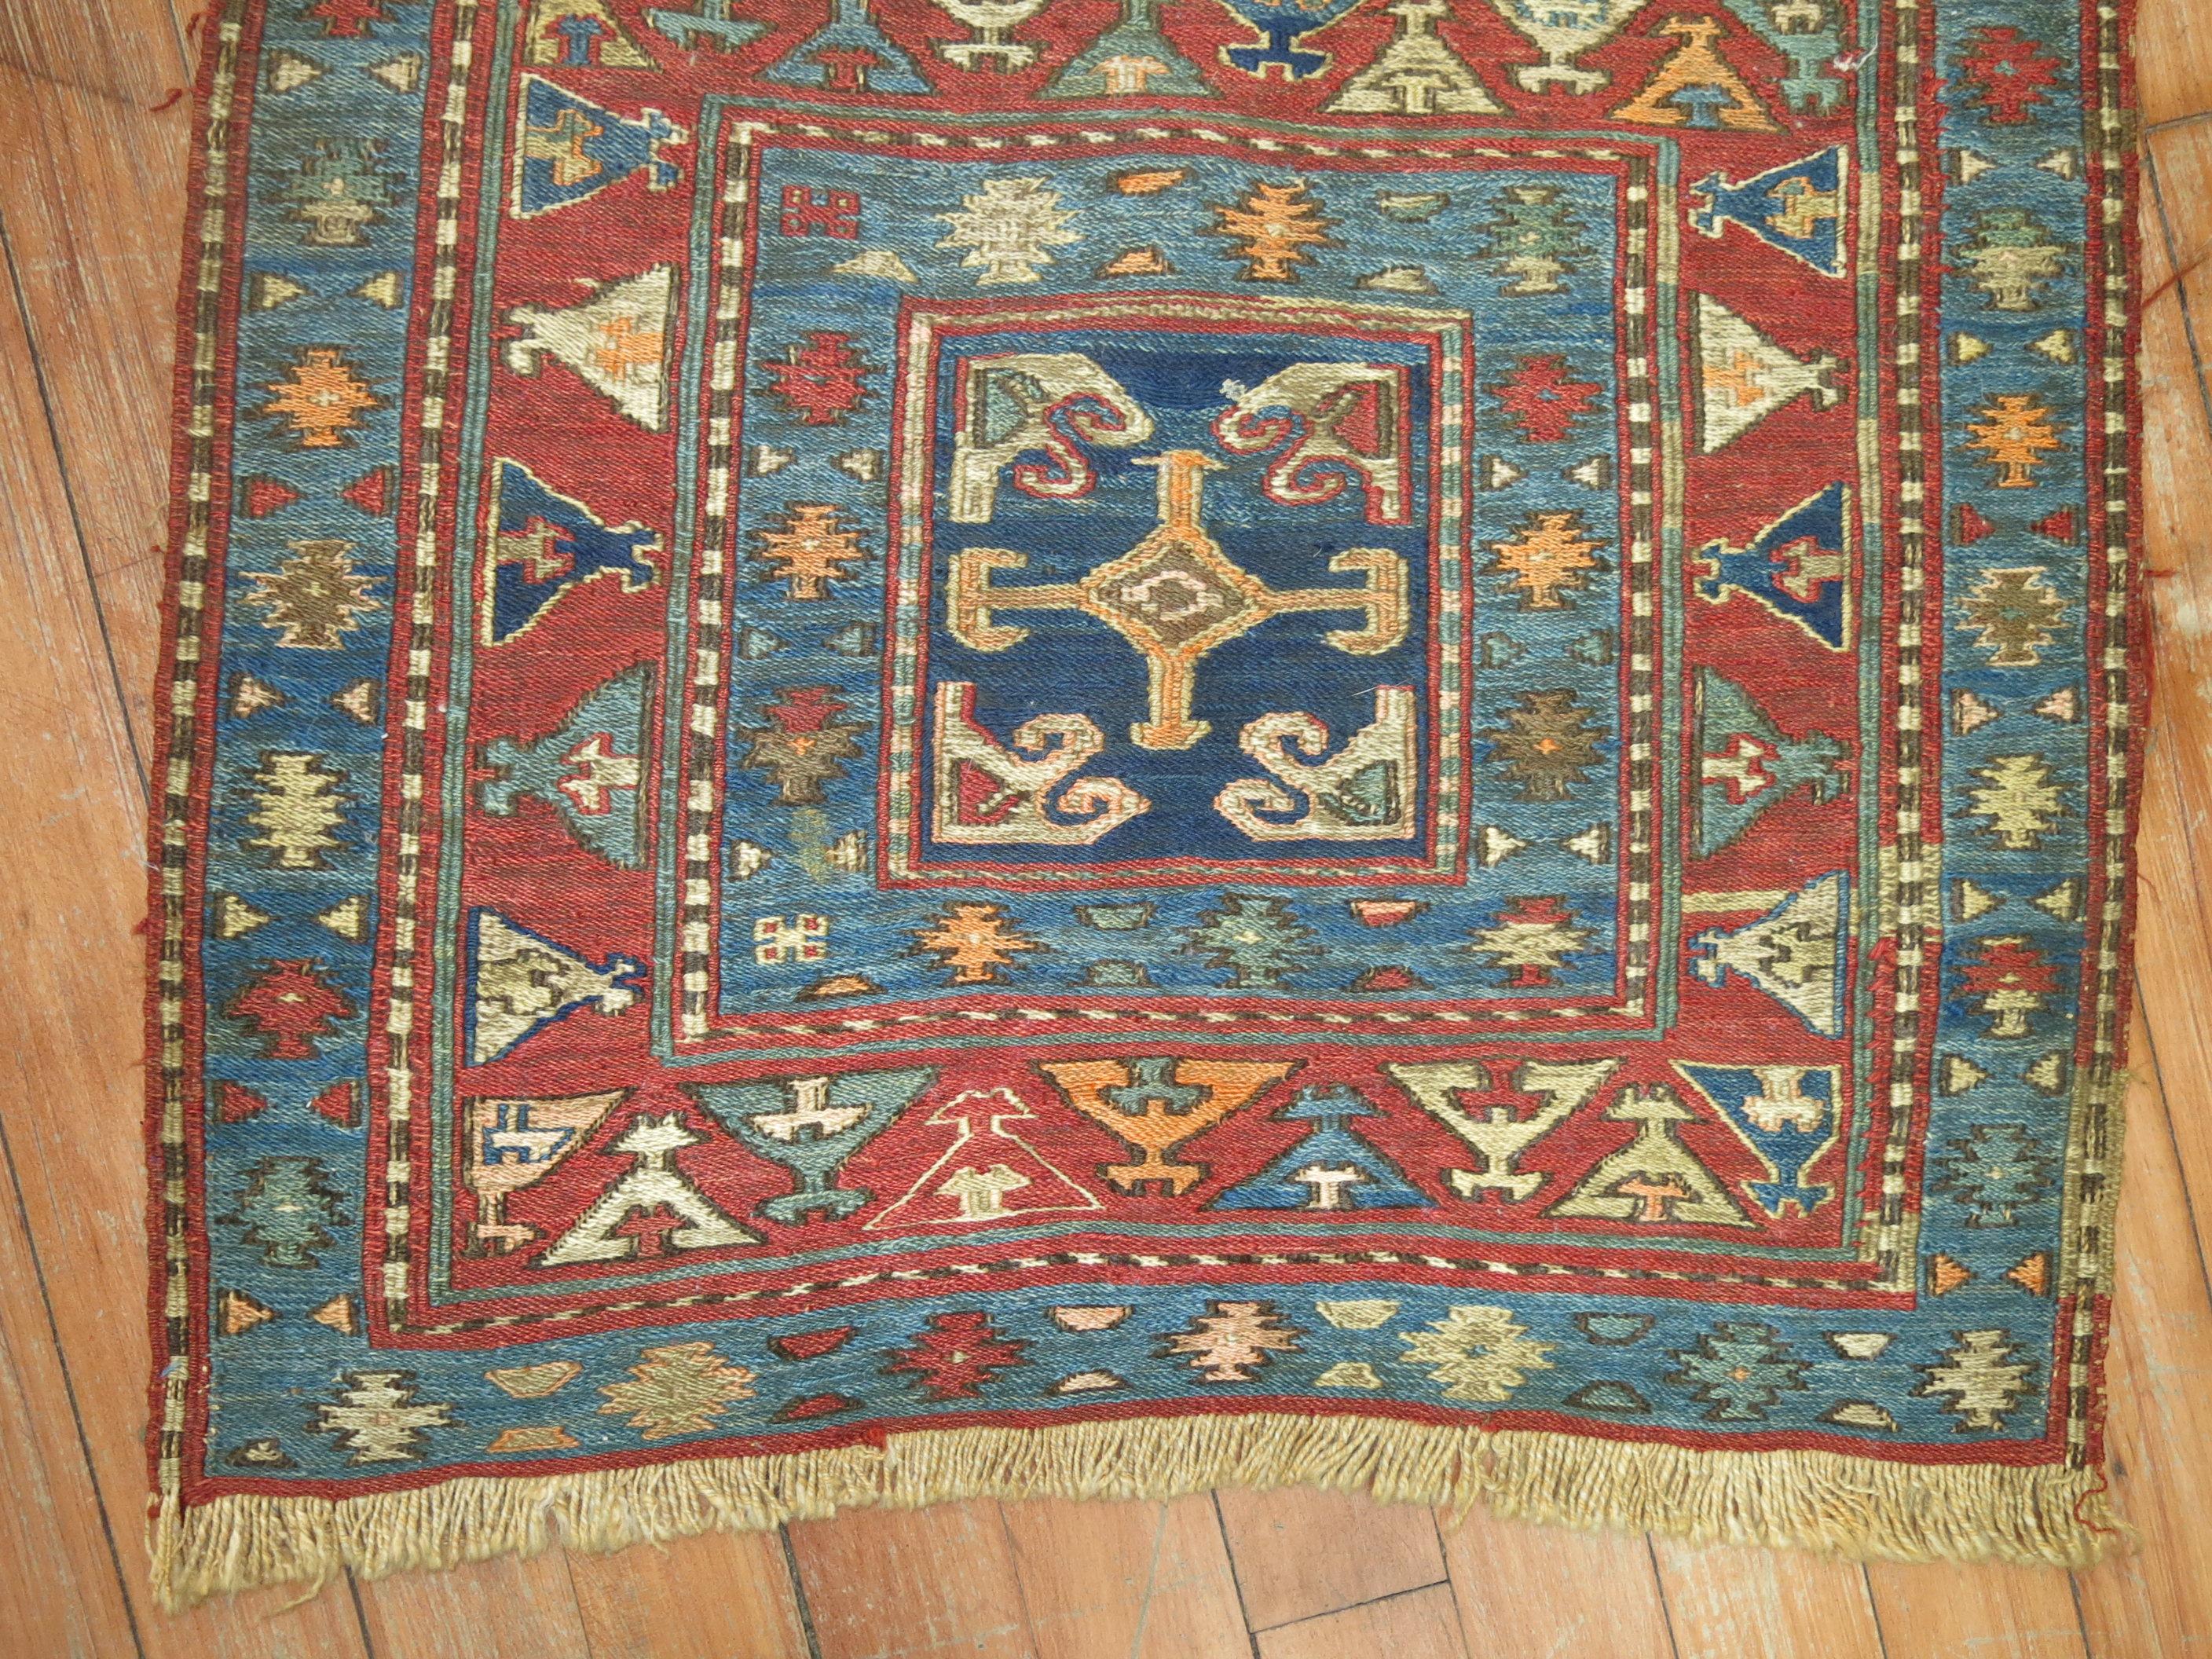 Hand-Woven 19th Century Tribal Antique Persian Soumac Flat-Weave Rustic Rug